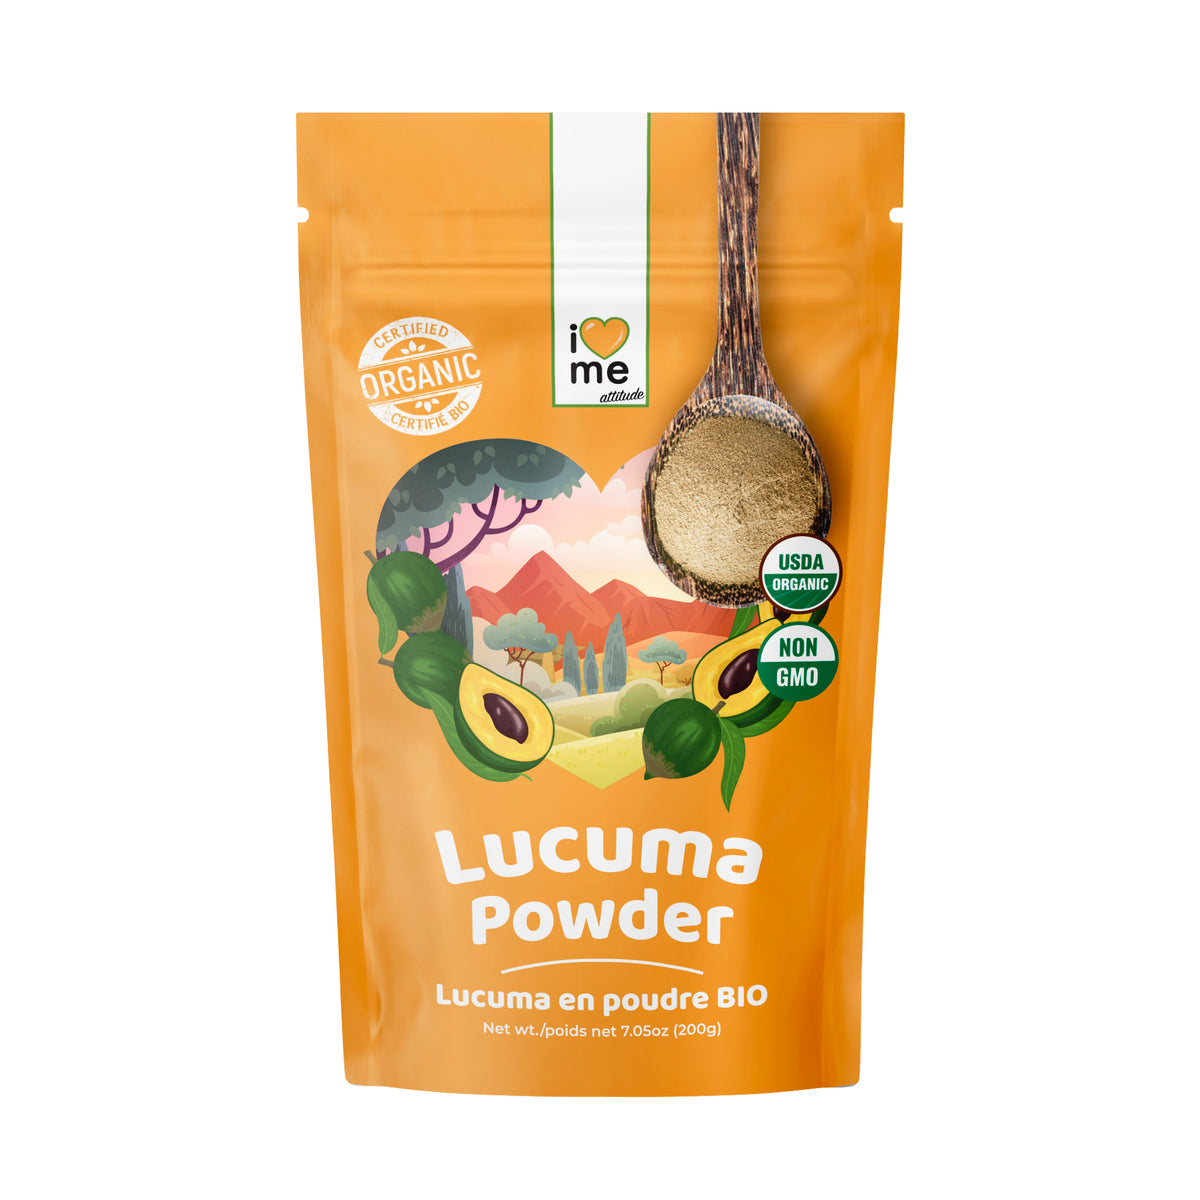 Organic Lucuma Powder | PlantBased Superfood ILOVEMEattitude – I LOVE ME  attitude